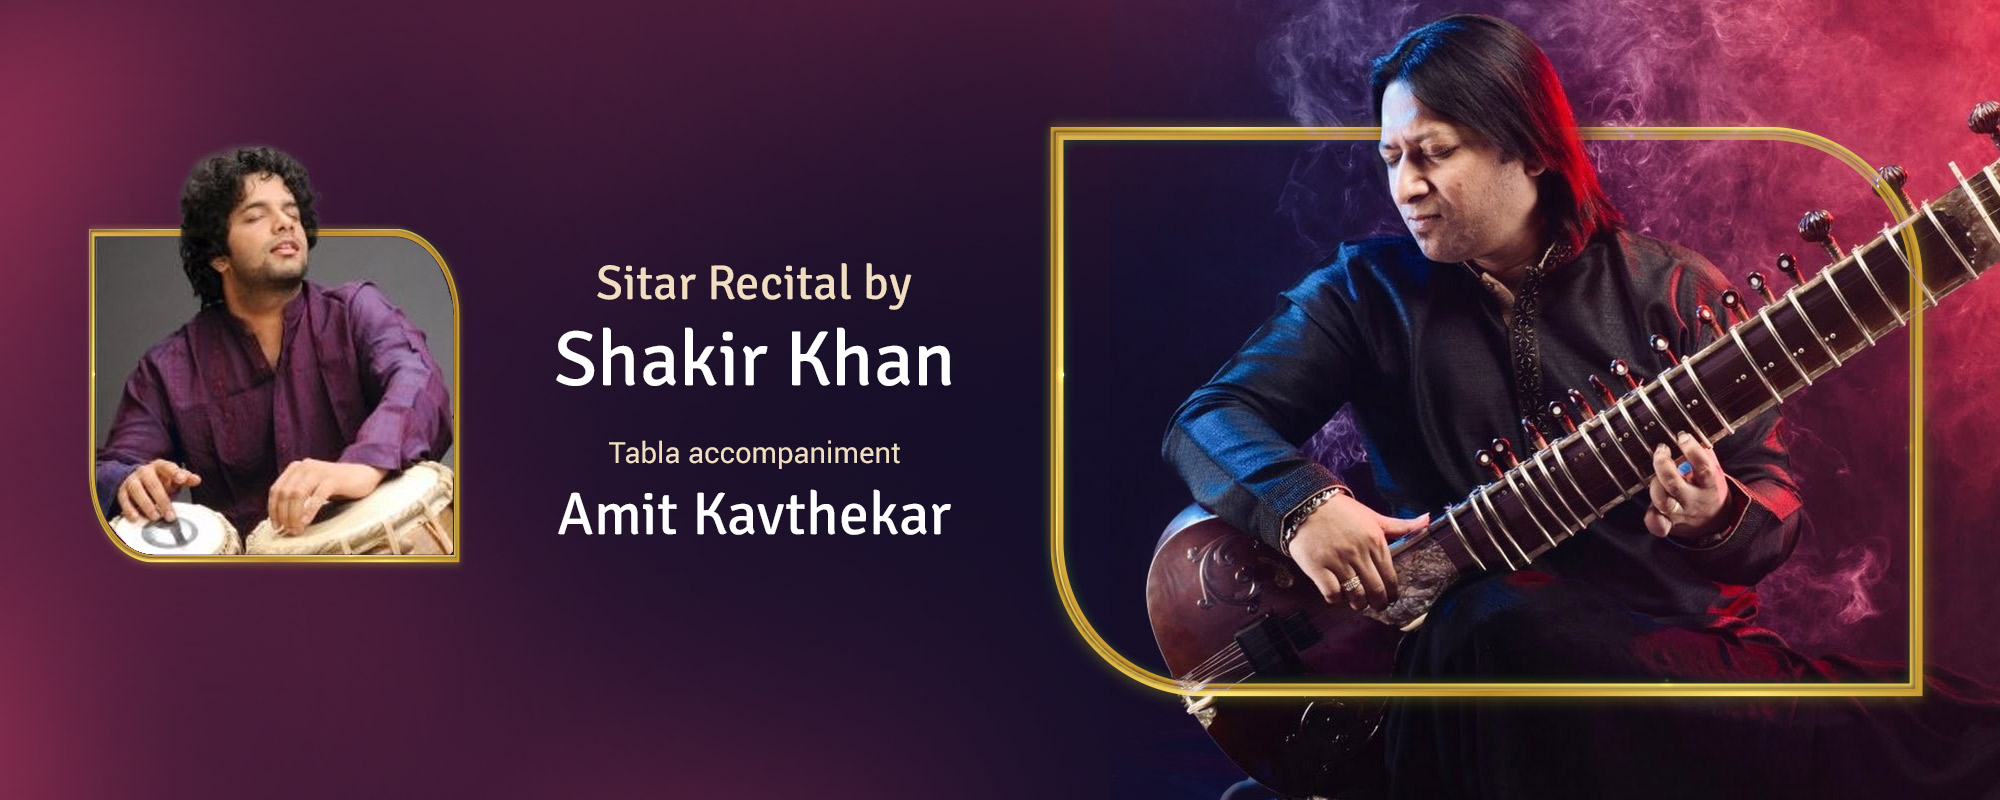 Shakir Khan with Amit Kavthekar Concert